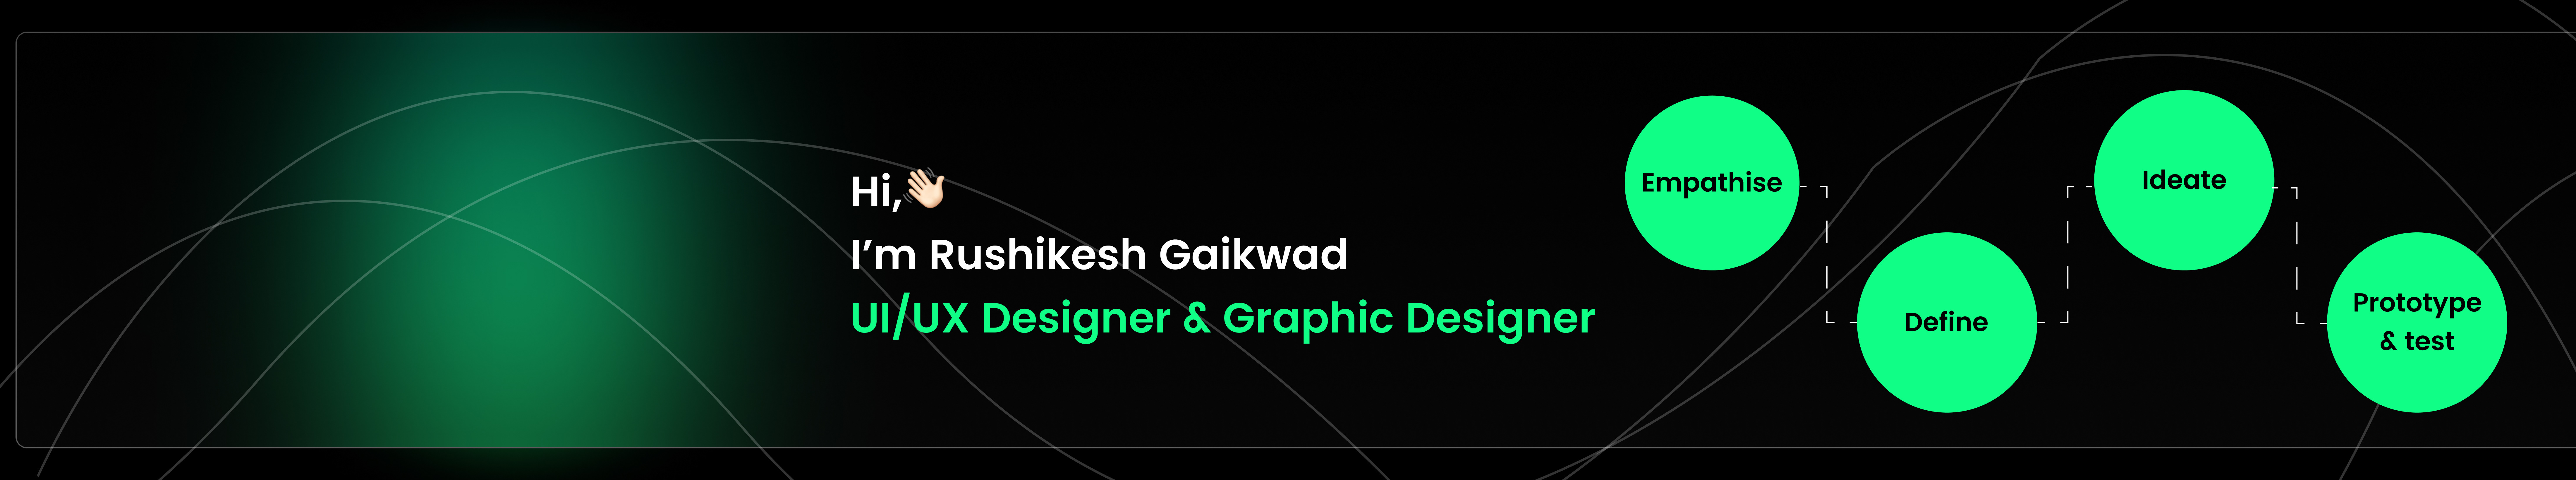 Rushikesh Gaikwad profil başlığı